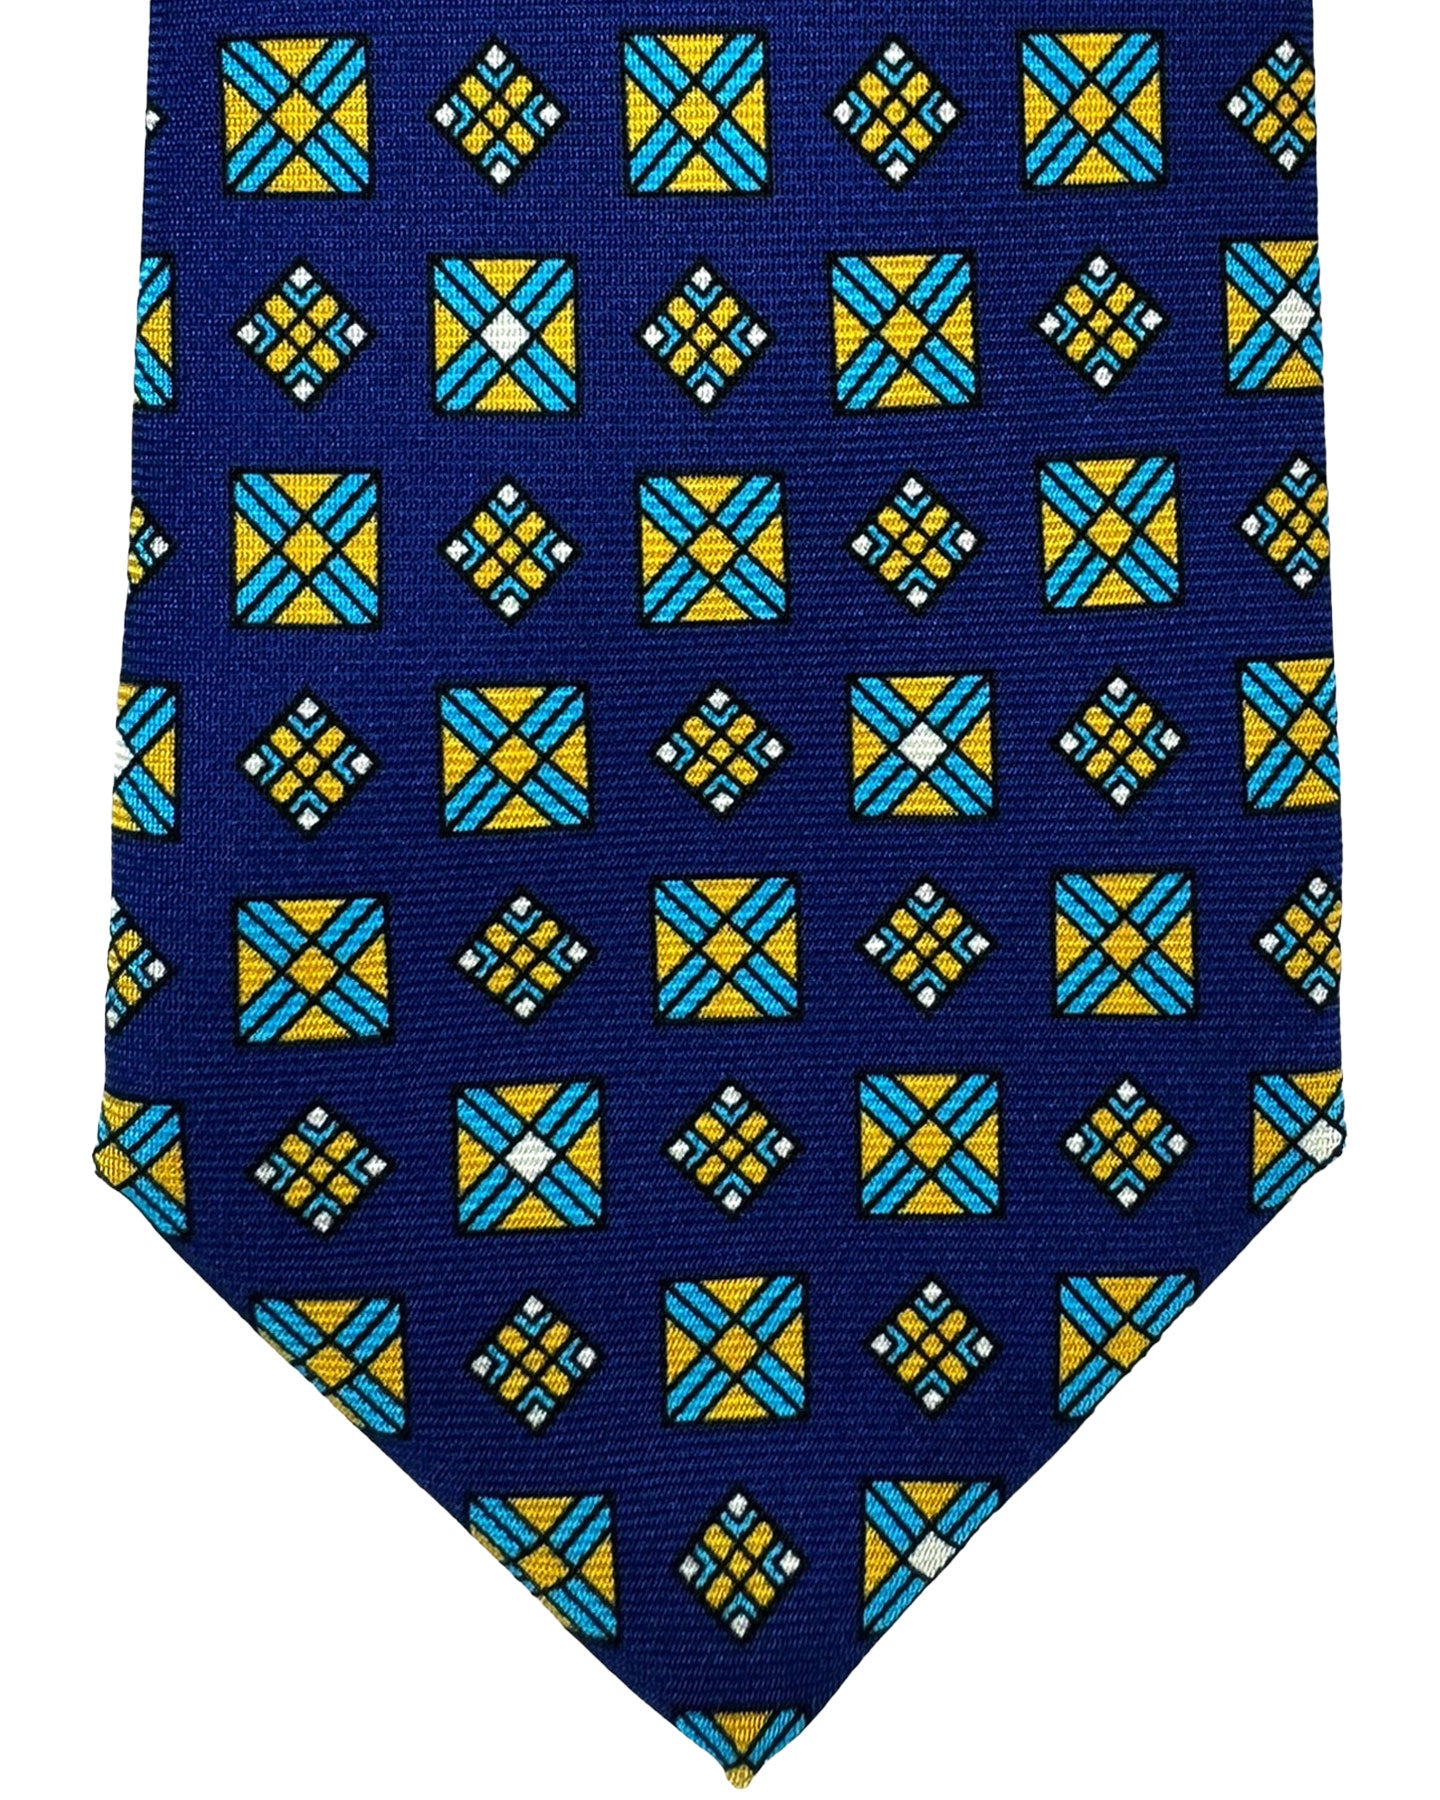 Kiton Tie Navy Aqua Olive Geometric - Sevenfold Necktie